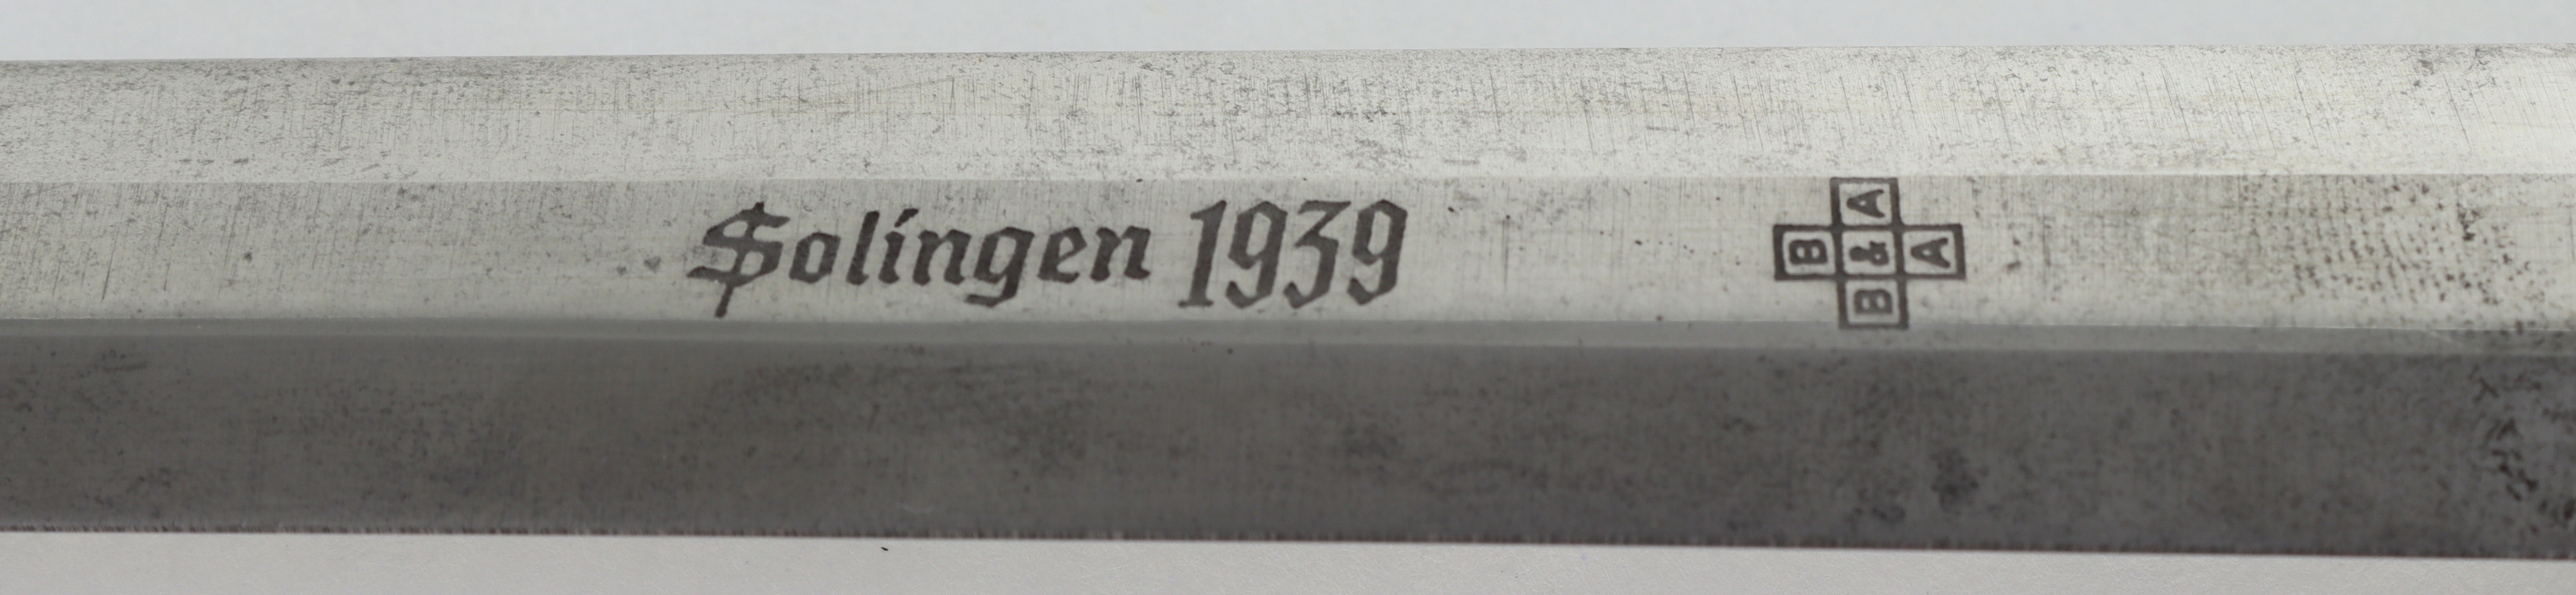   1939 WW2 German Solingen Dagger collectible